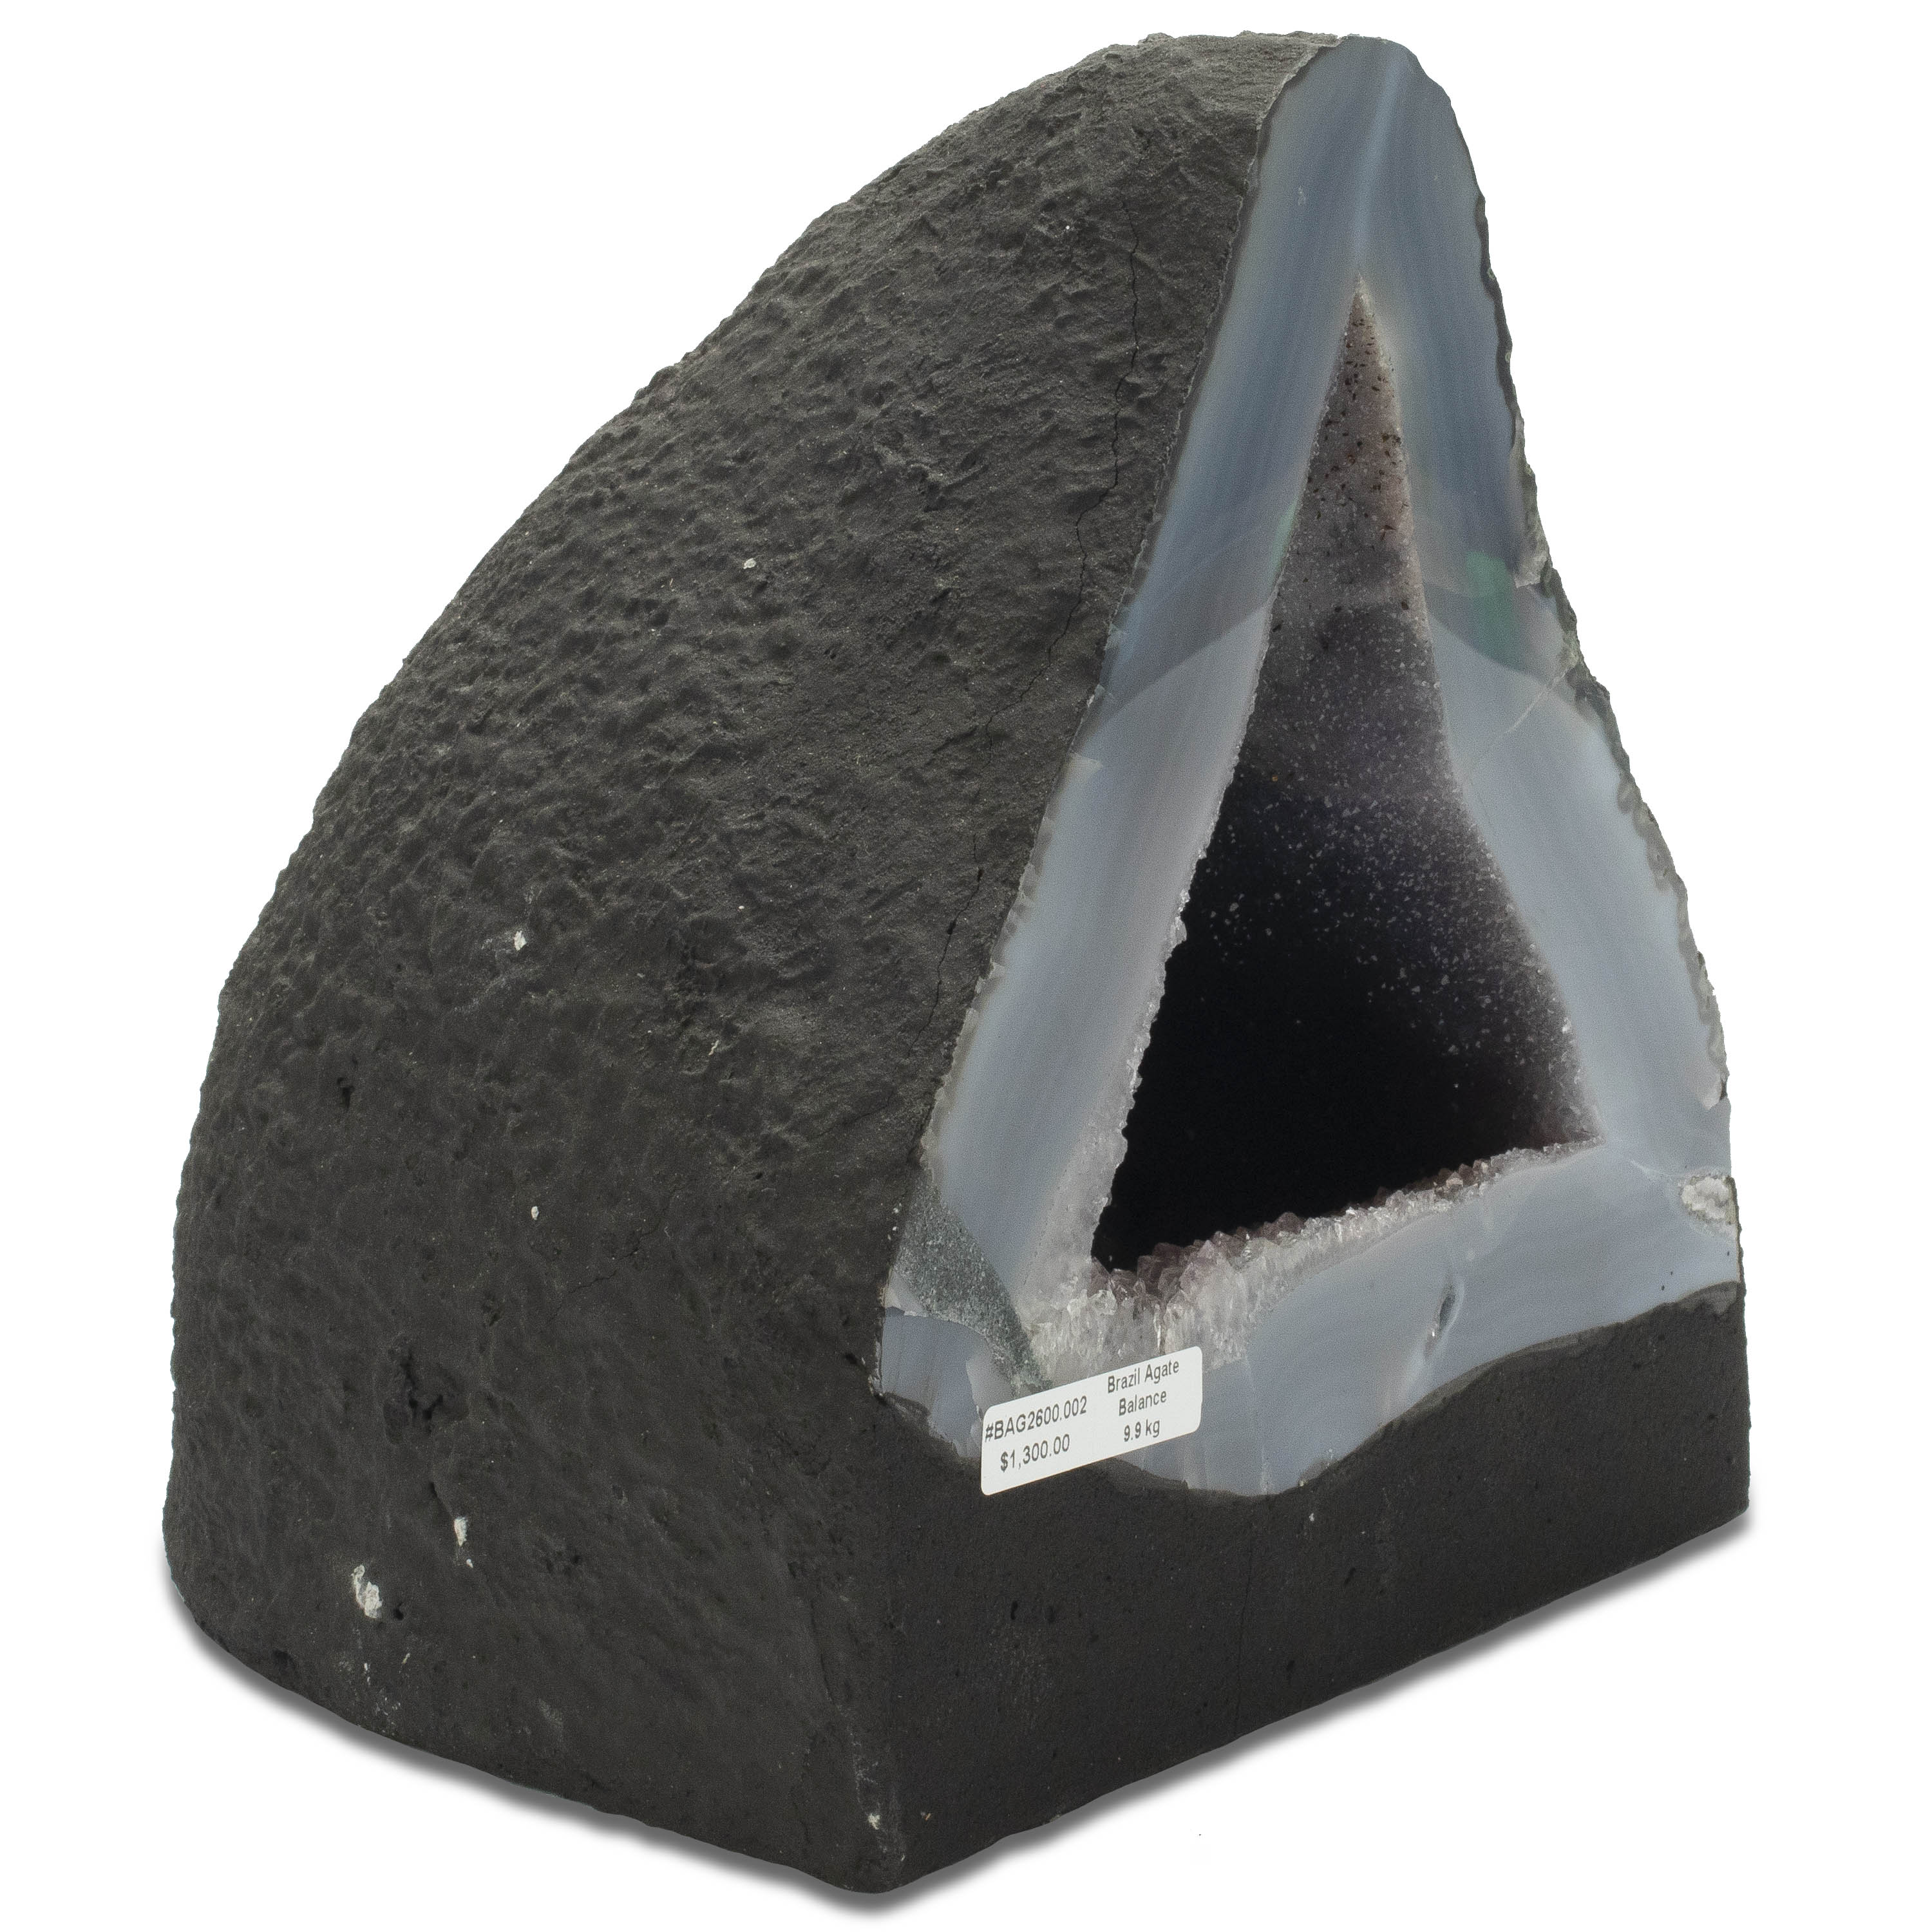 Kalifano Agate Agate Geode - 9 in. / 22 lbs BAG2600.002